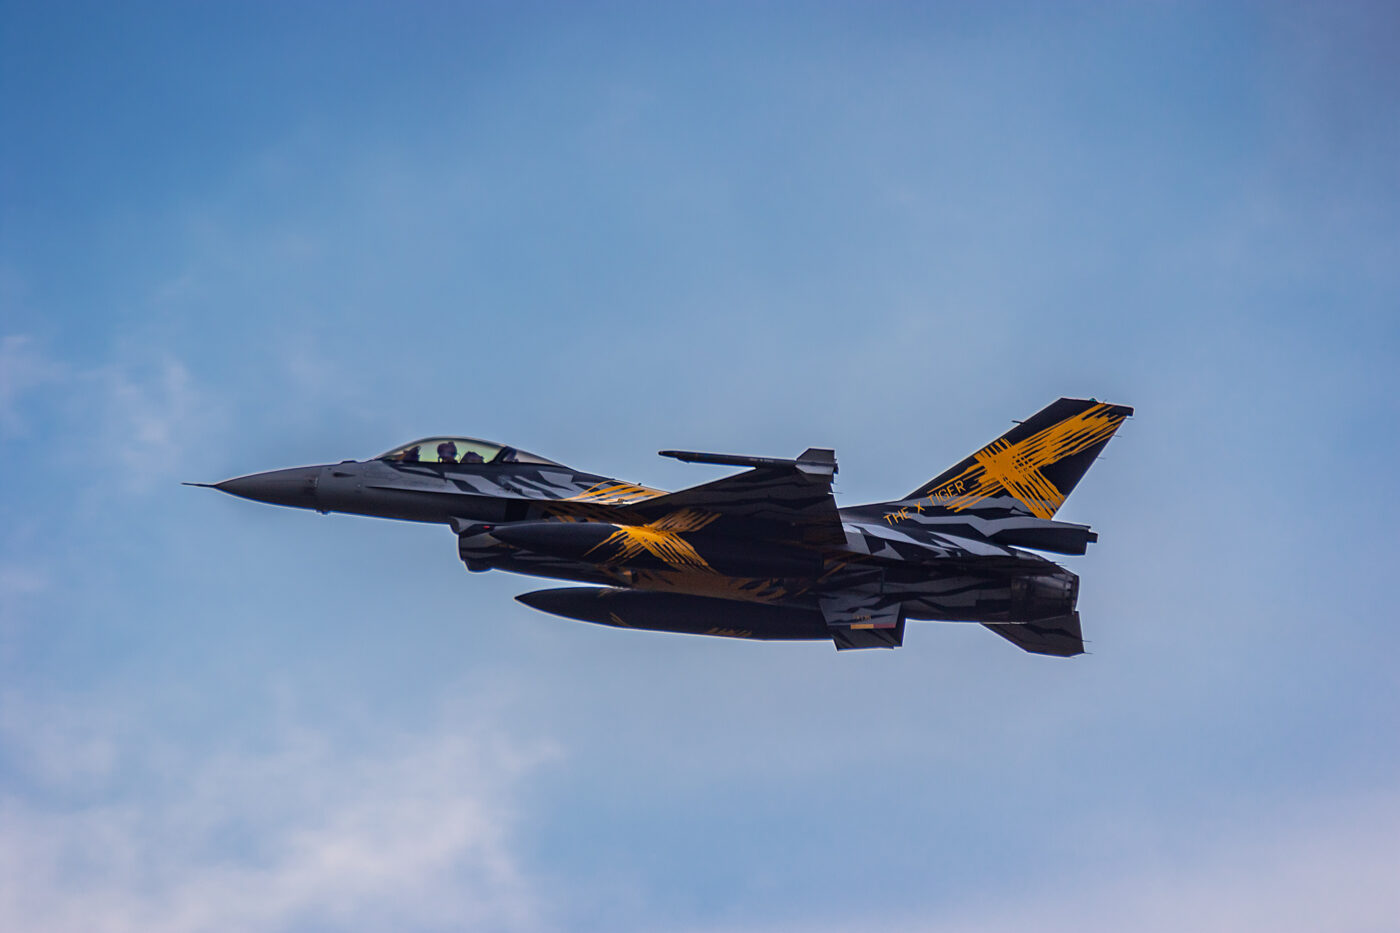 2021 XTM X-Tiger of Belgian Air Force 31SQN